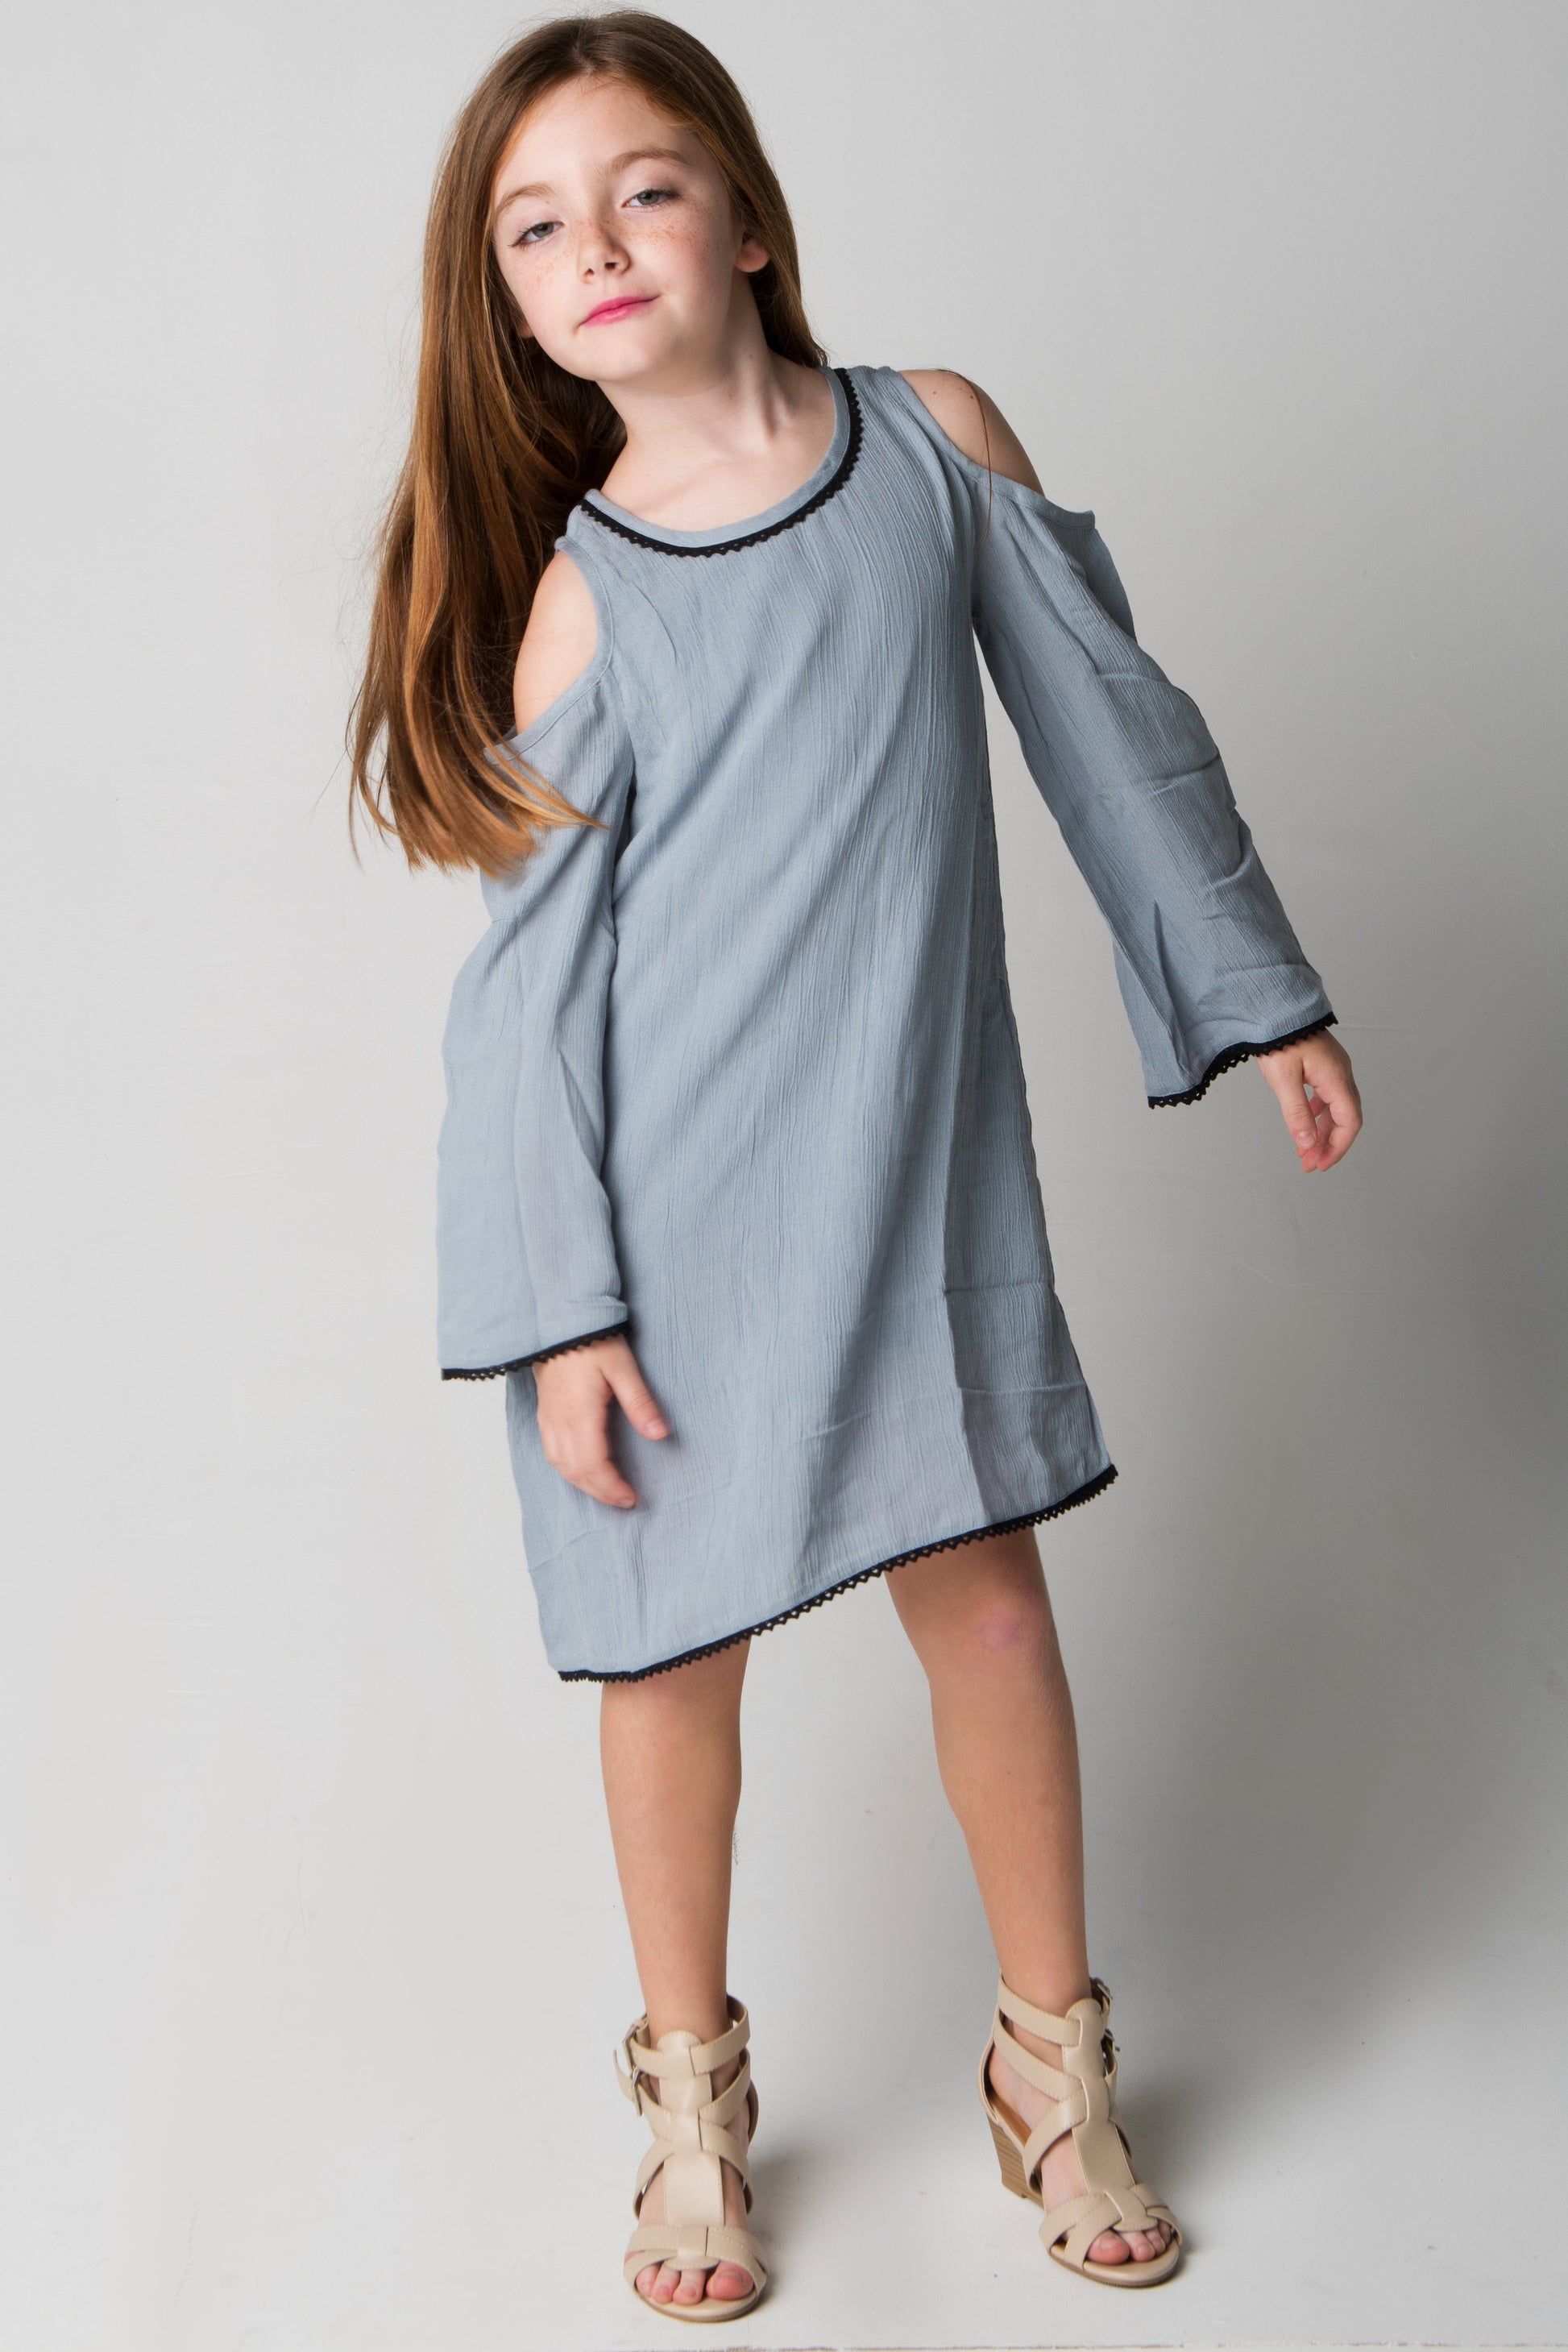 Grey Lace Detail Cold-Shoulder Dress